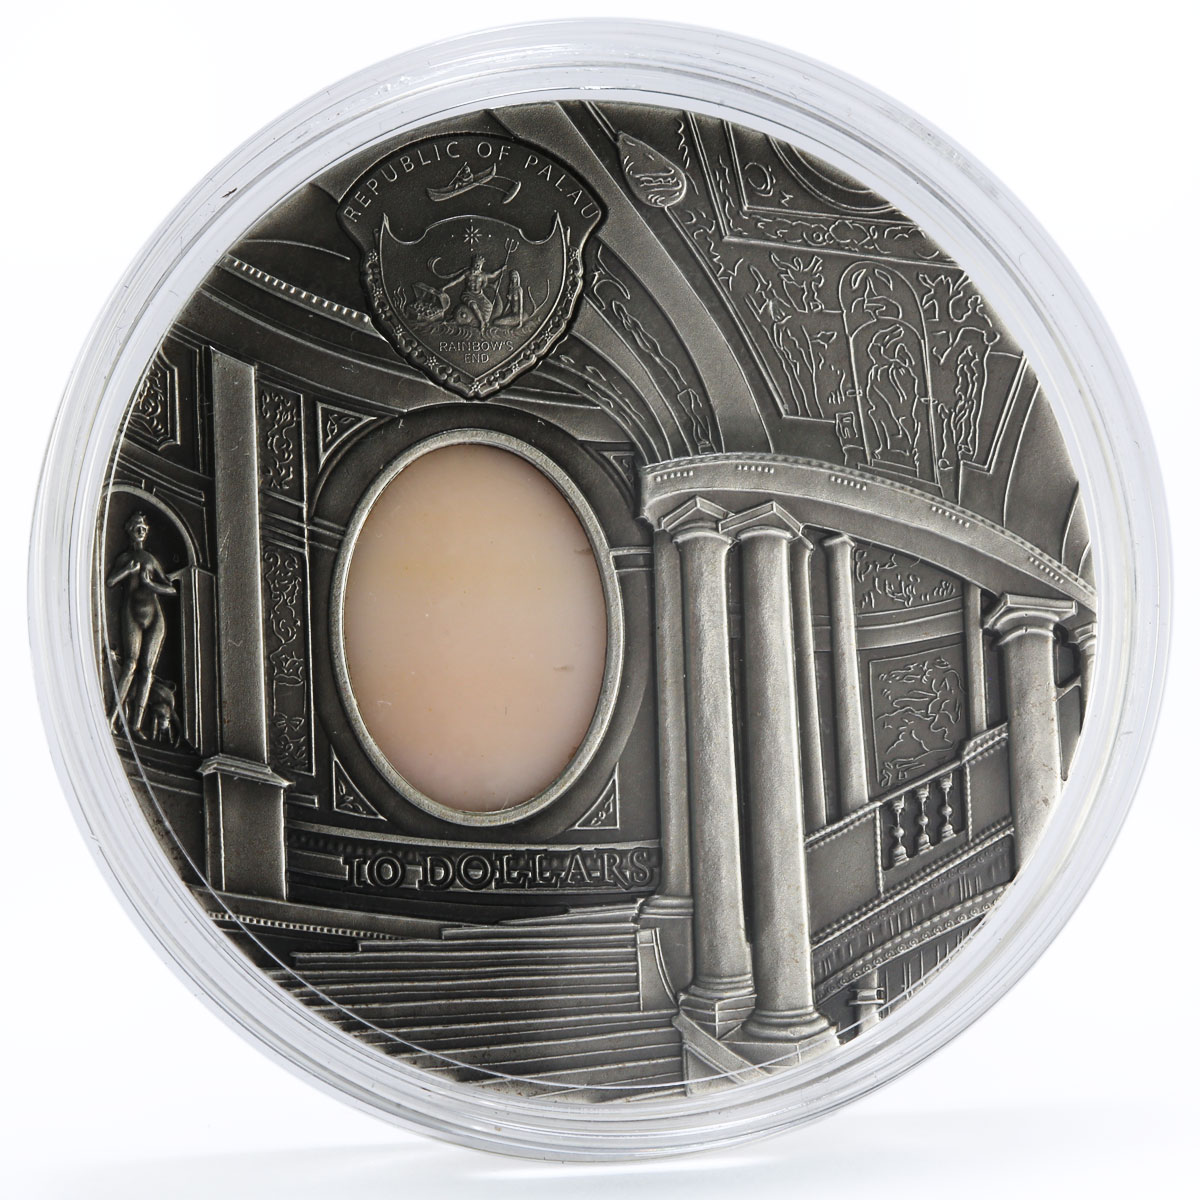 Palau 10 dollars Tiffany Art series Mannerism silver coin 2008